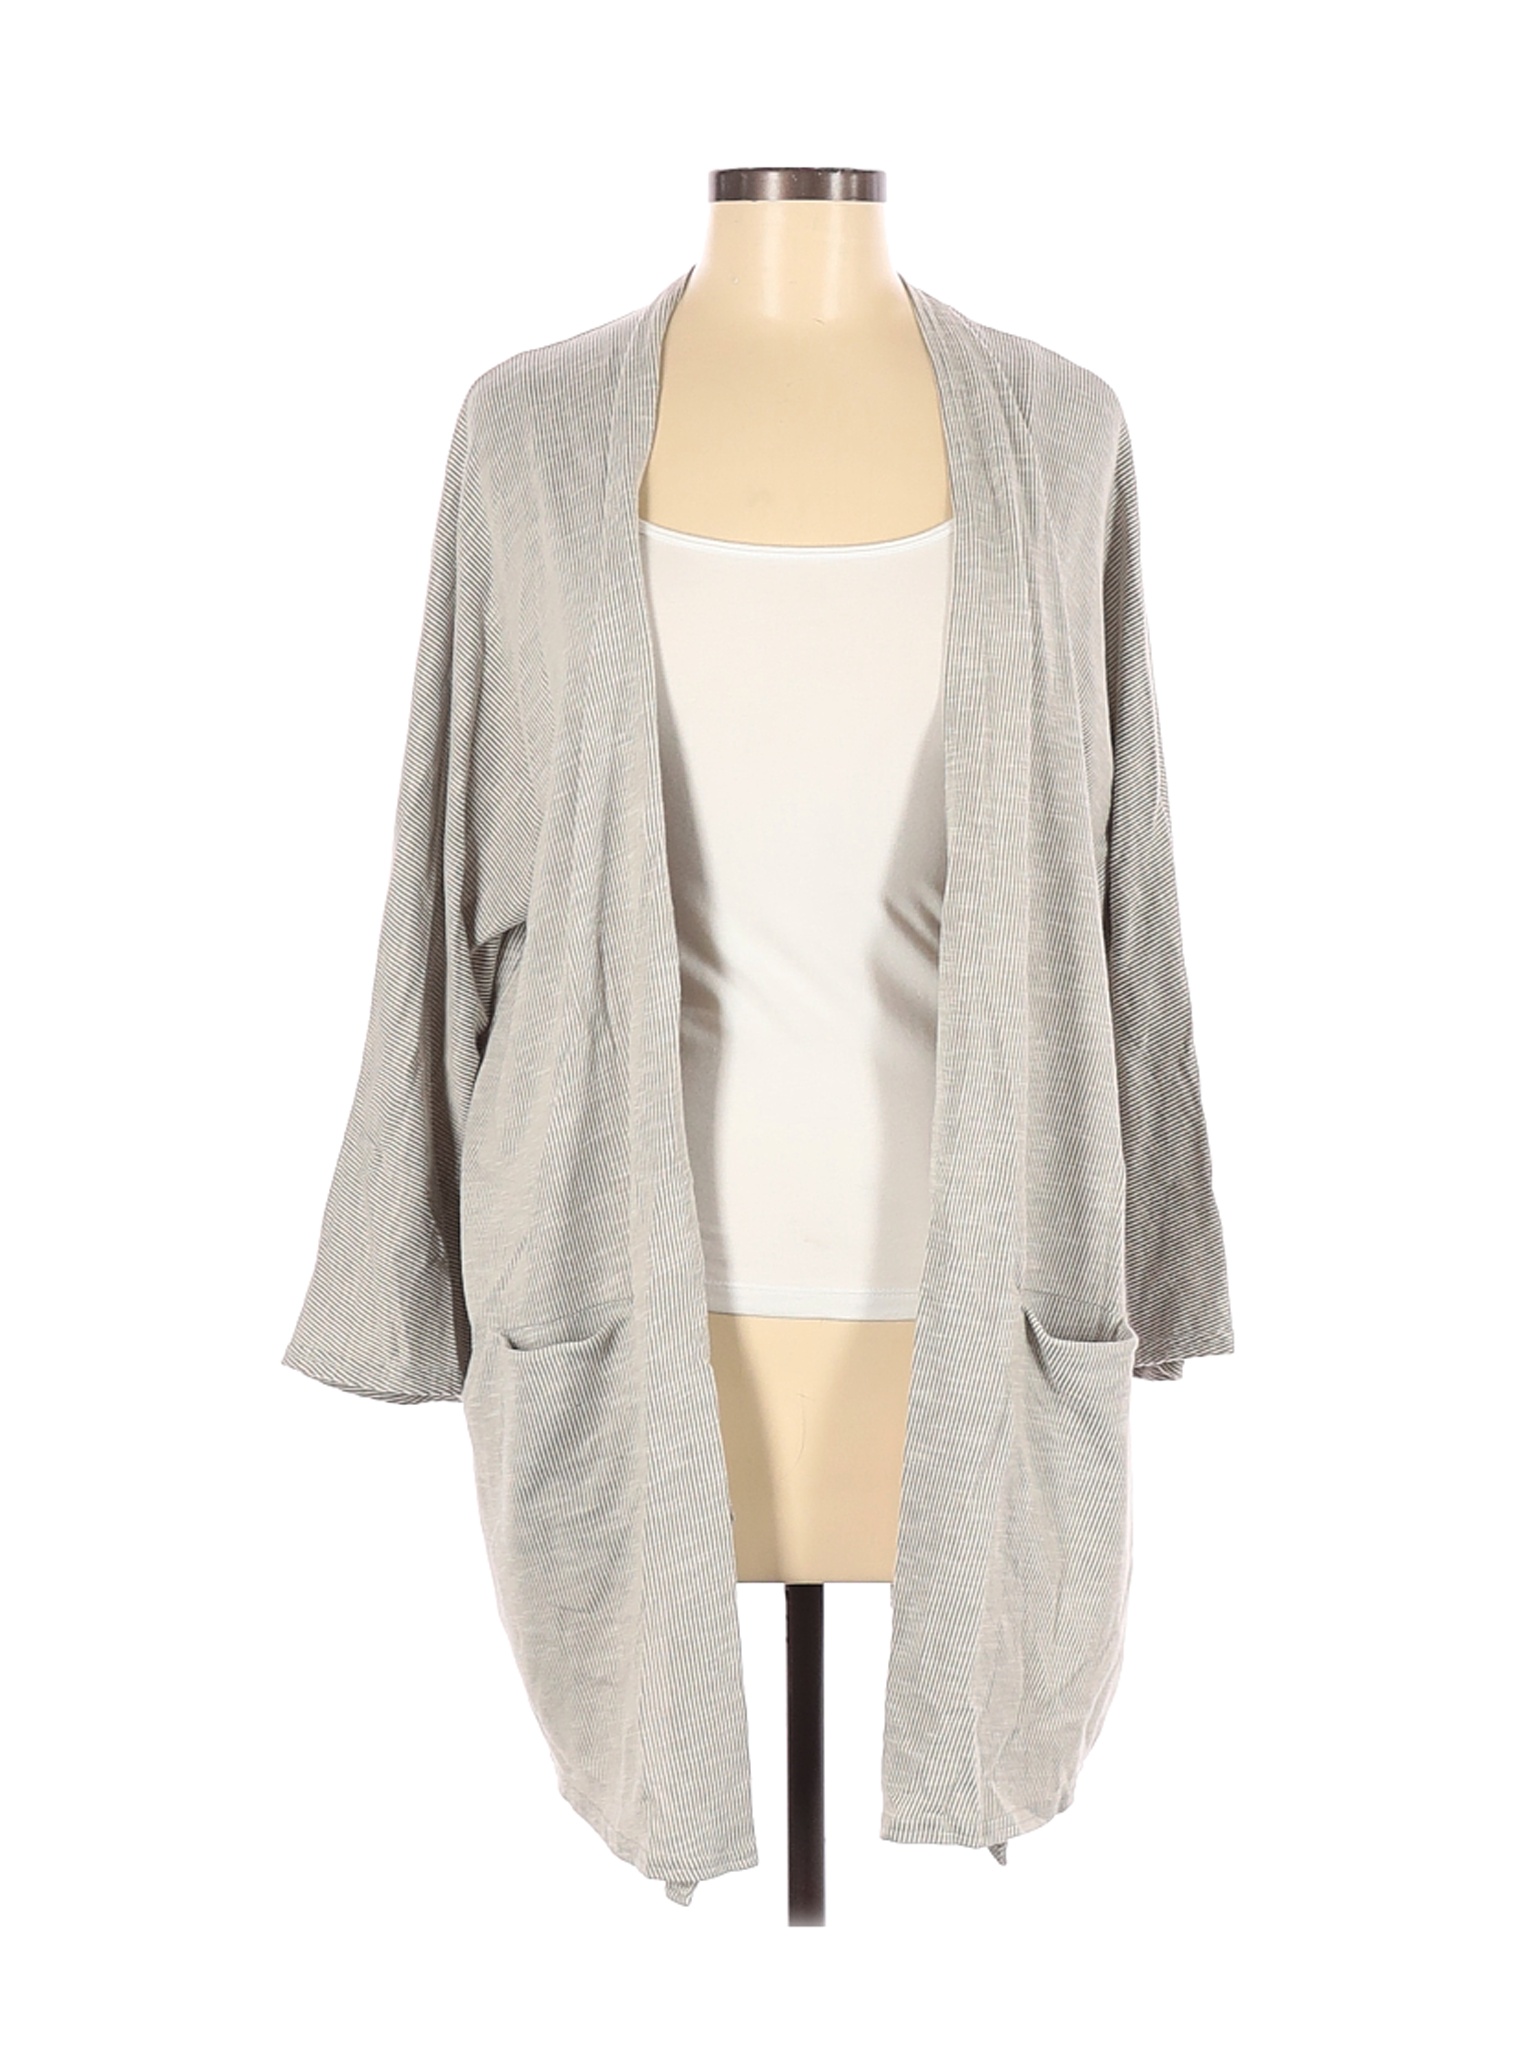 DONNI Women Gray Cardigan One Size | eBay